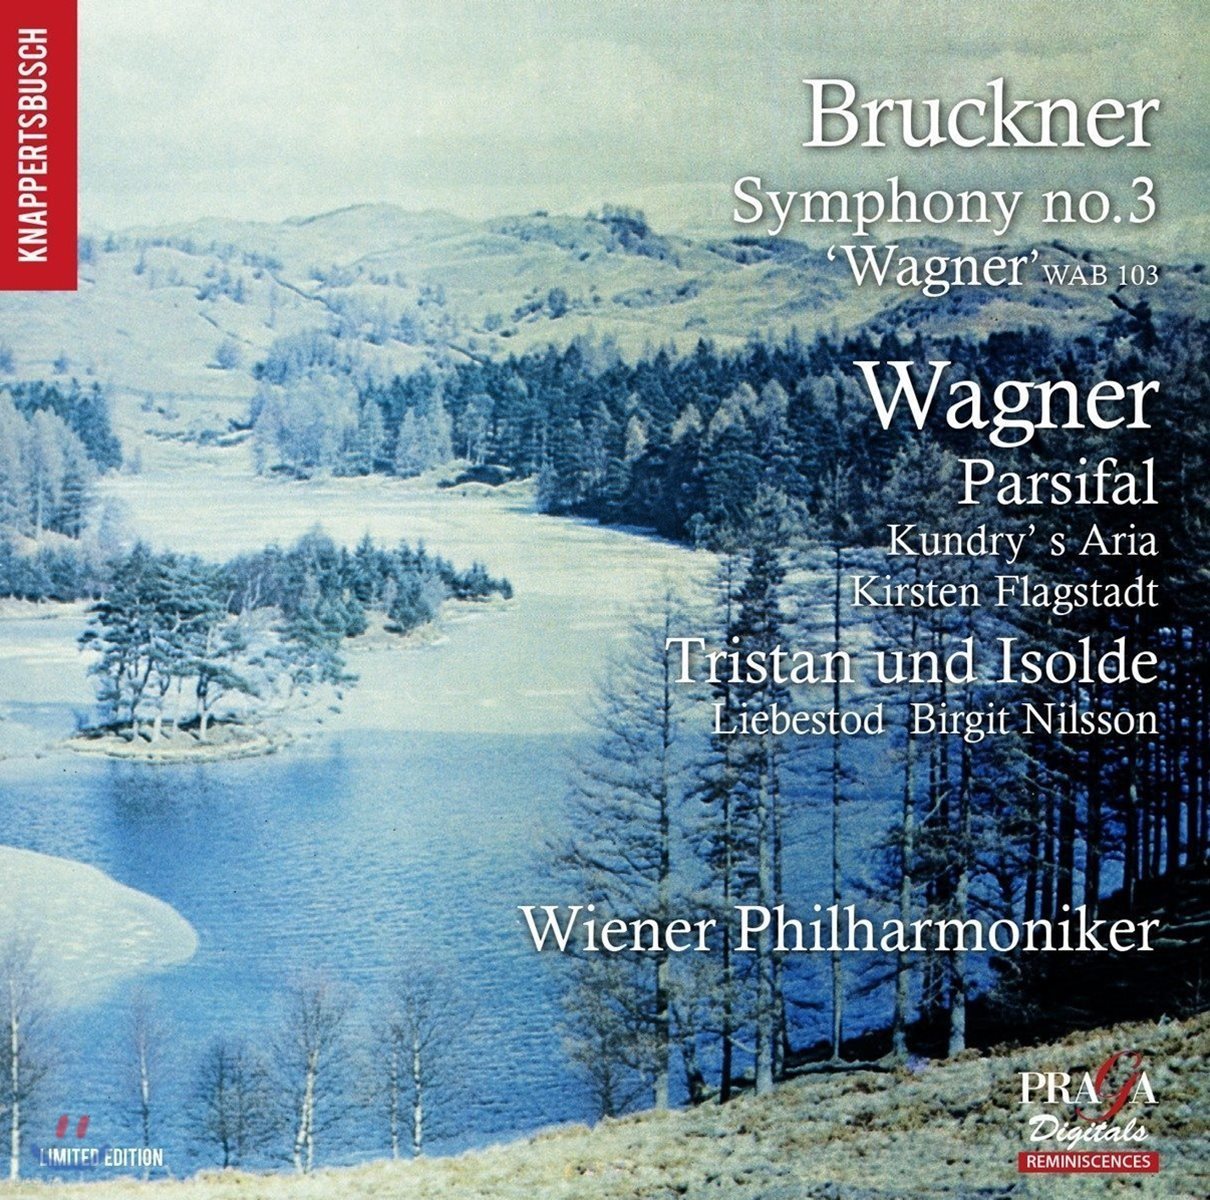 Hans Knappertsbusch 브루크너: 교향곡 3번 / 바그너: 파르지팔, 트리스탄과 이졸데 '사랑의 죽음' (Bruckner: Symphony WAB103 / Wagner: Parsifal, Tristan und Isolde 'Liebestod')